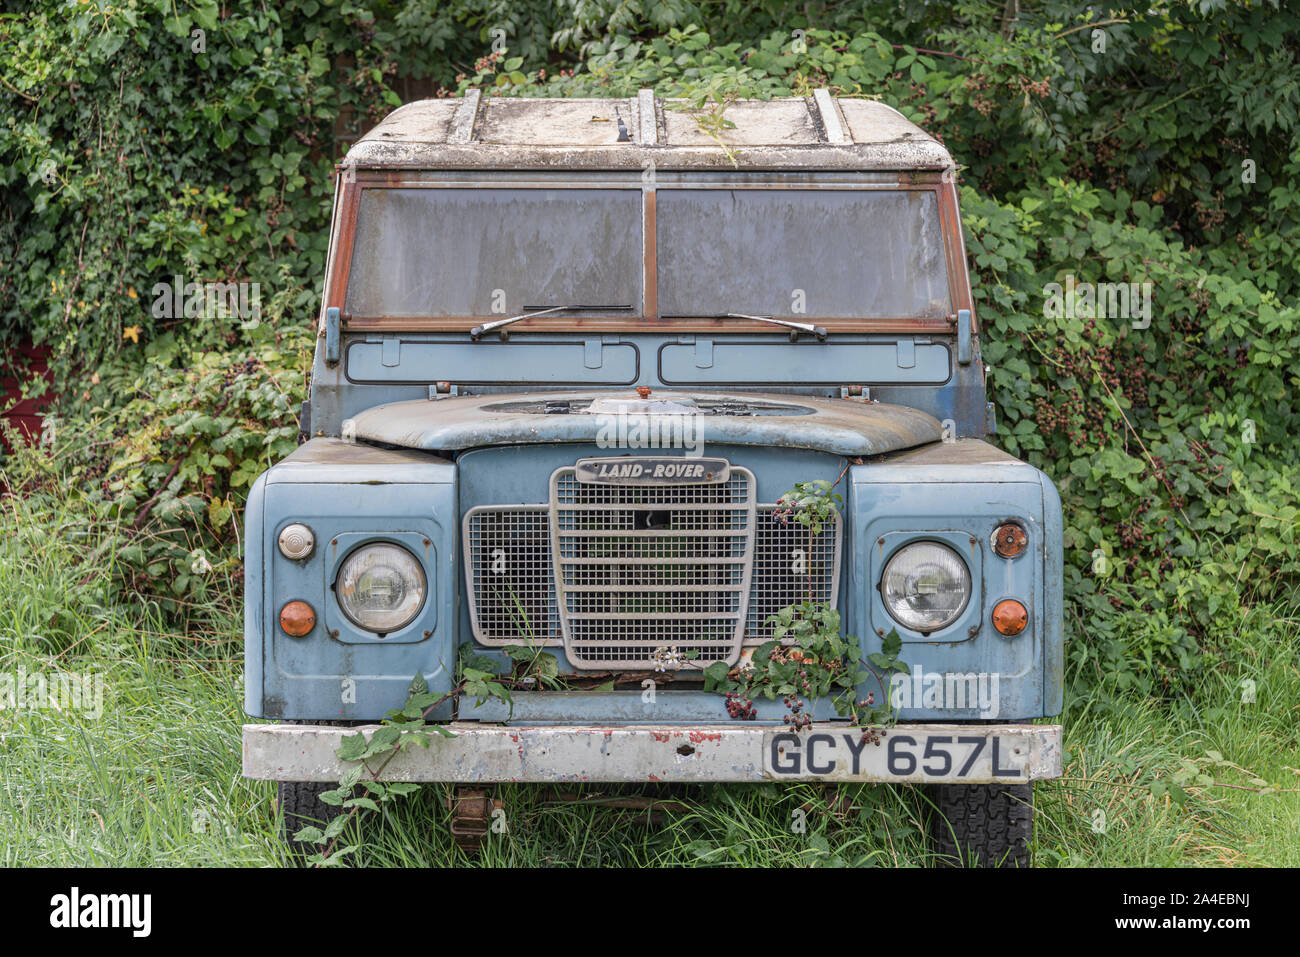 Vintage Land Rover being overrun by dense undergrowth, Caerphilly, Wales, UK. 06.09.2019 Please credit: Ffotograff Stock Photo